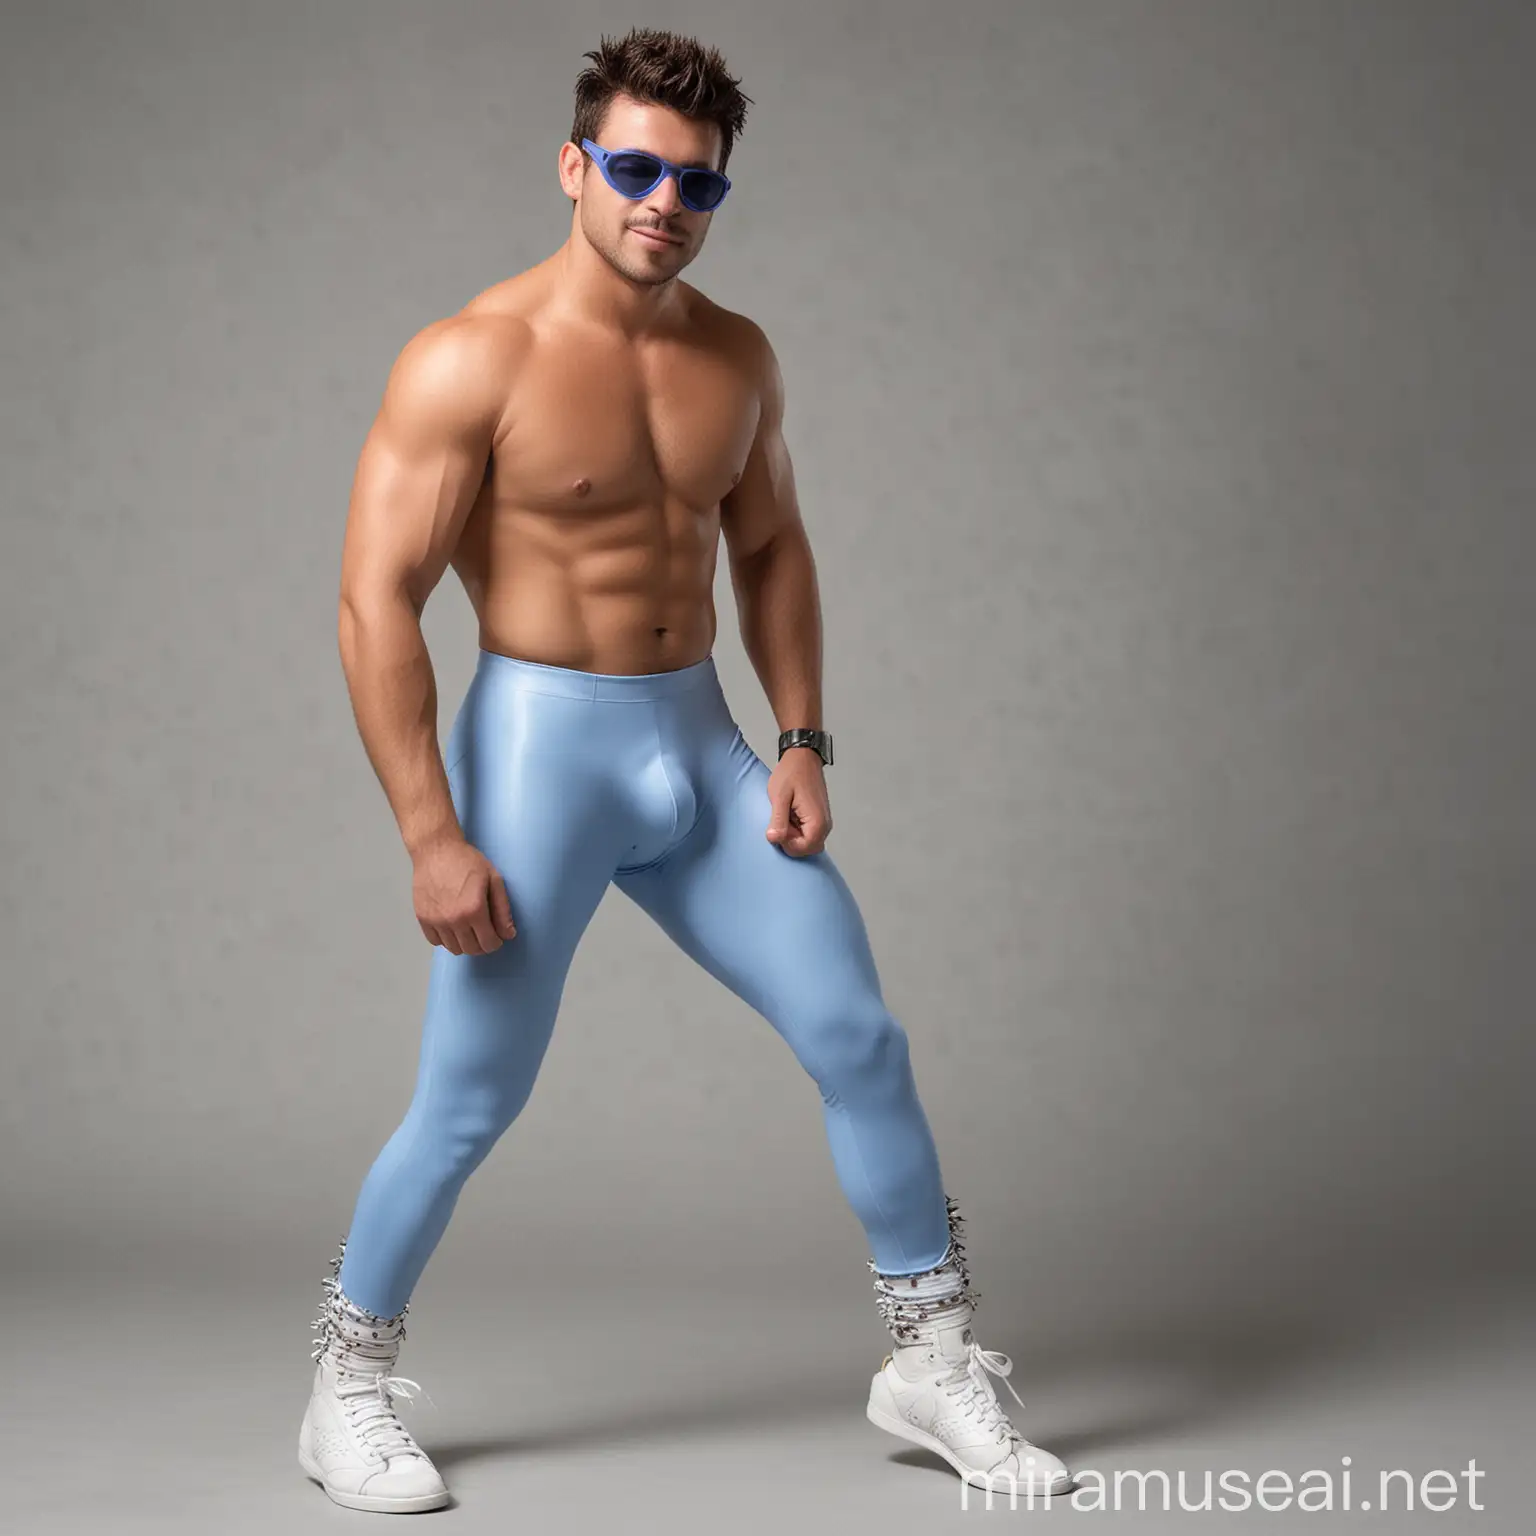 Athletic Argentine Wrestler in Spandex Leggings and Sunglasses